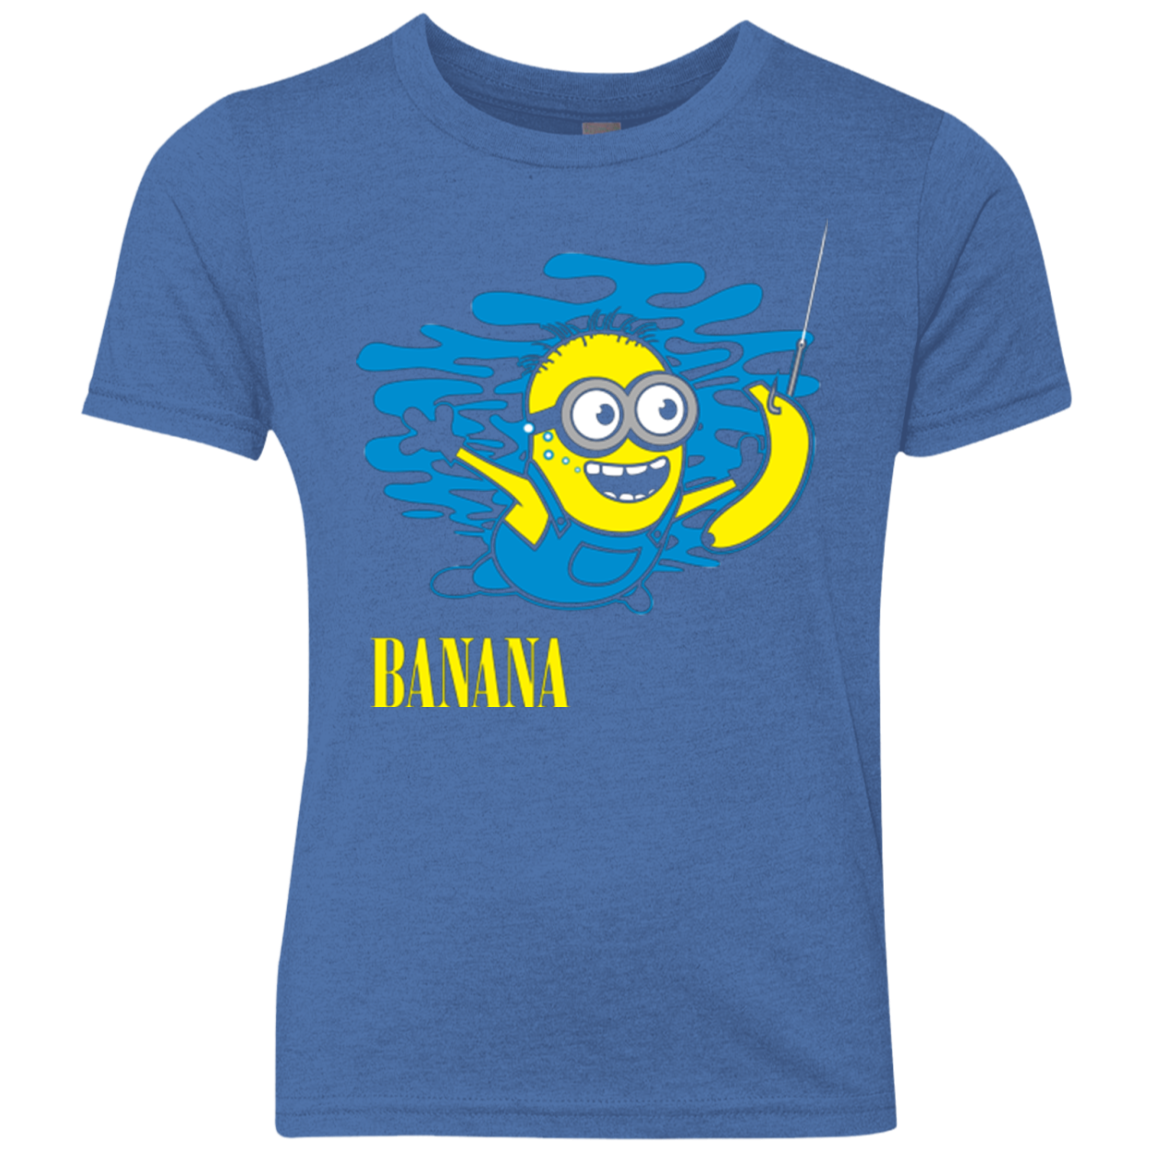 Nirvana Banana Youth Triblend T-Shirt